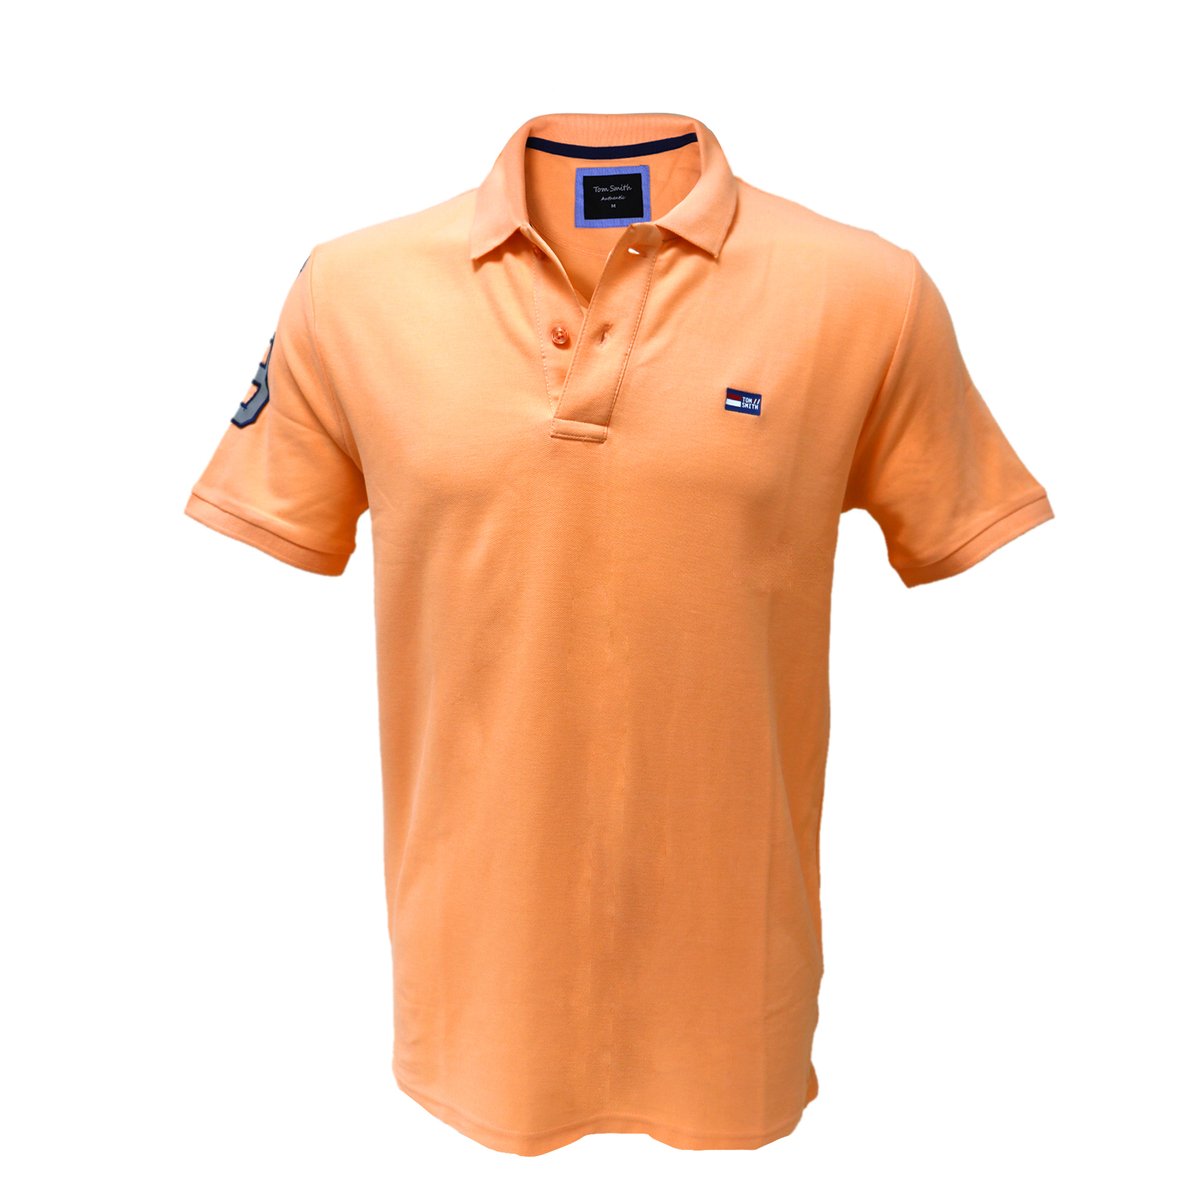 Tom Smith Polo T-Shirt Peach Nectar - M